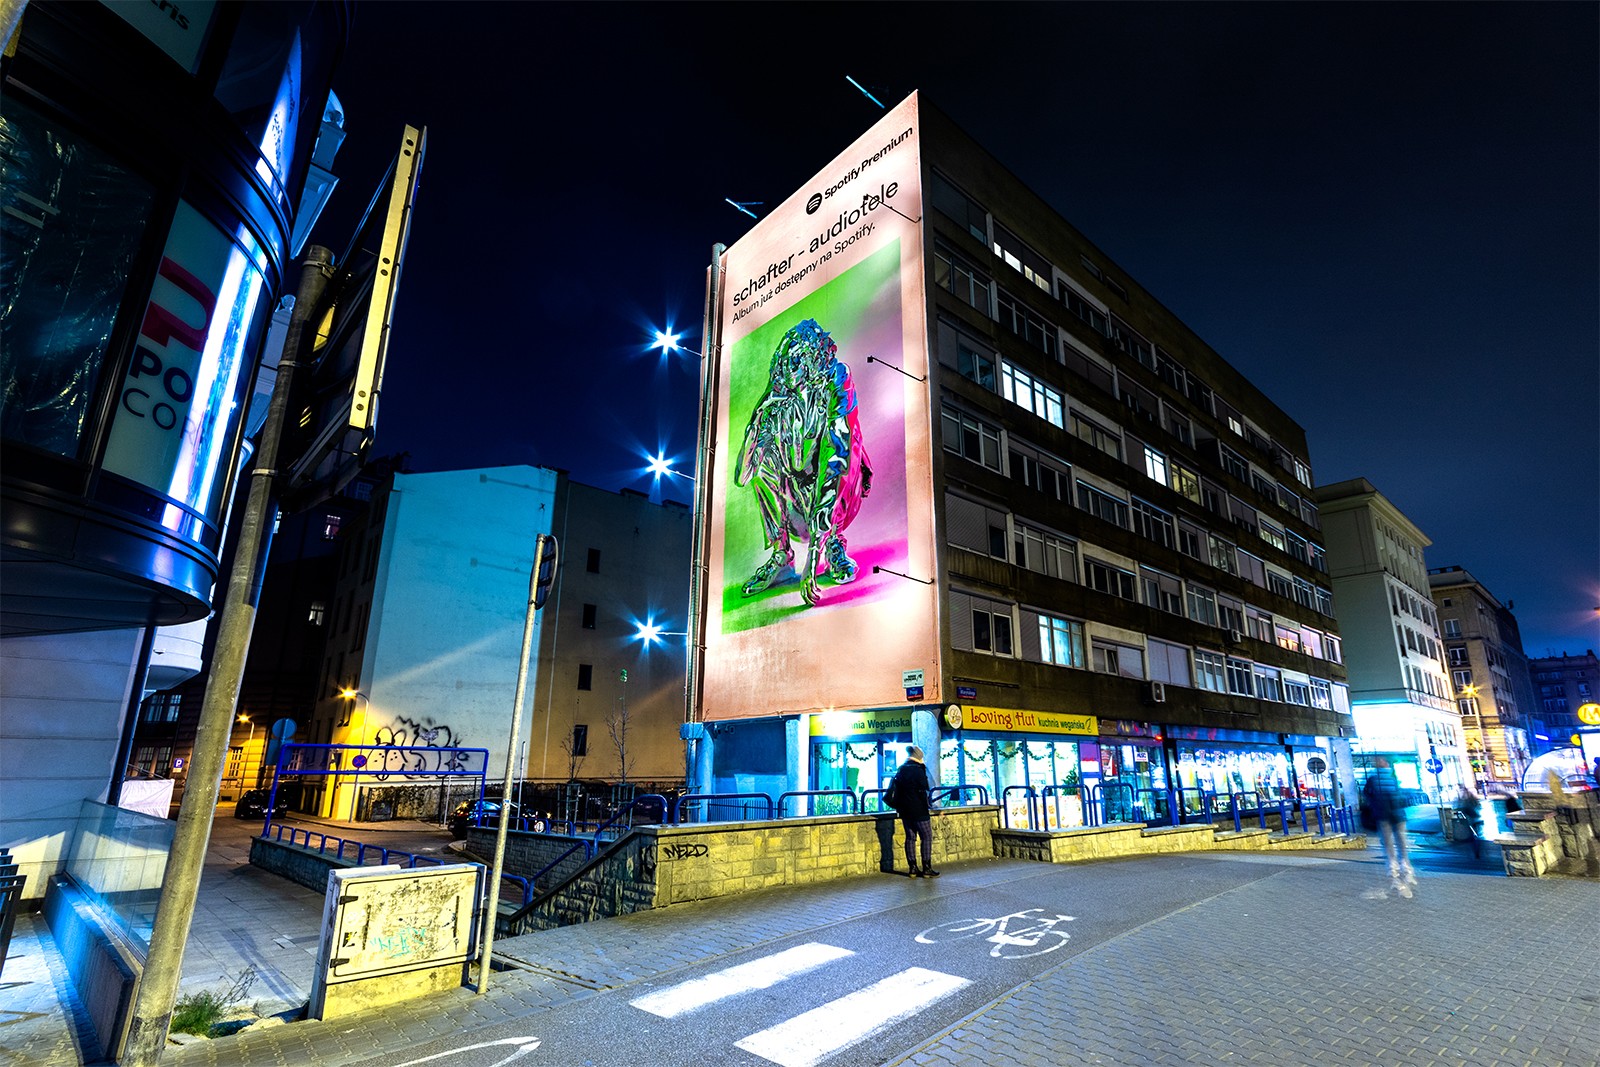 Mural promotes new album of Schafter near by Politechnika subway station | Schafter - Audiotele | Portfolio